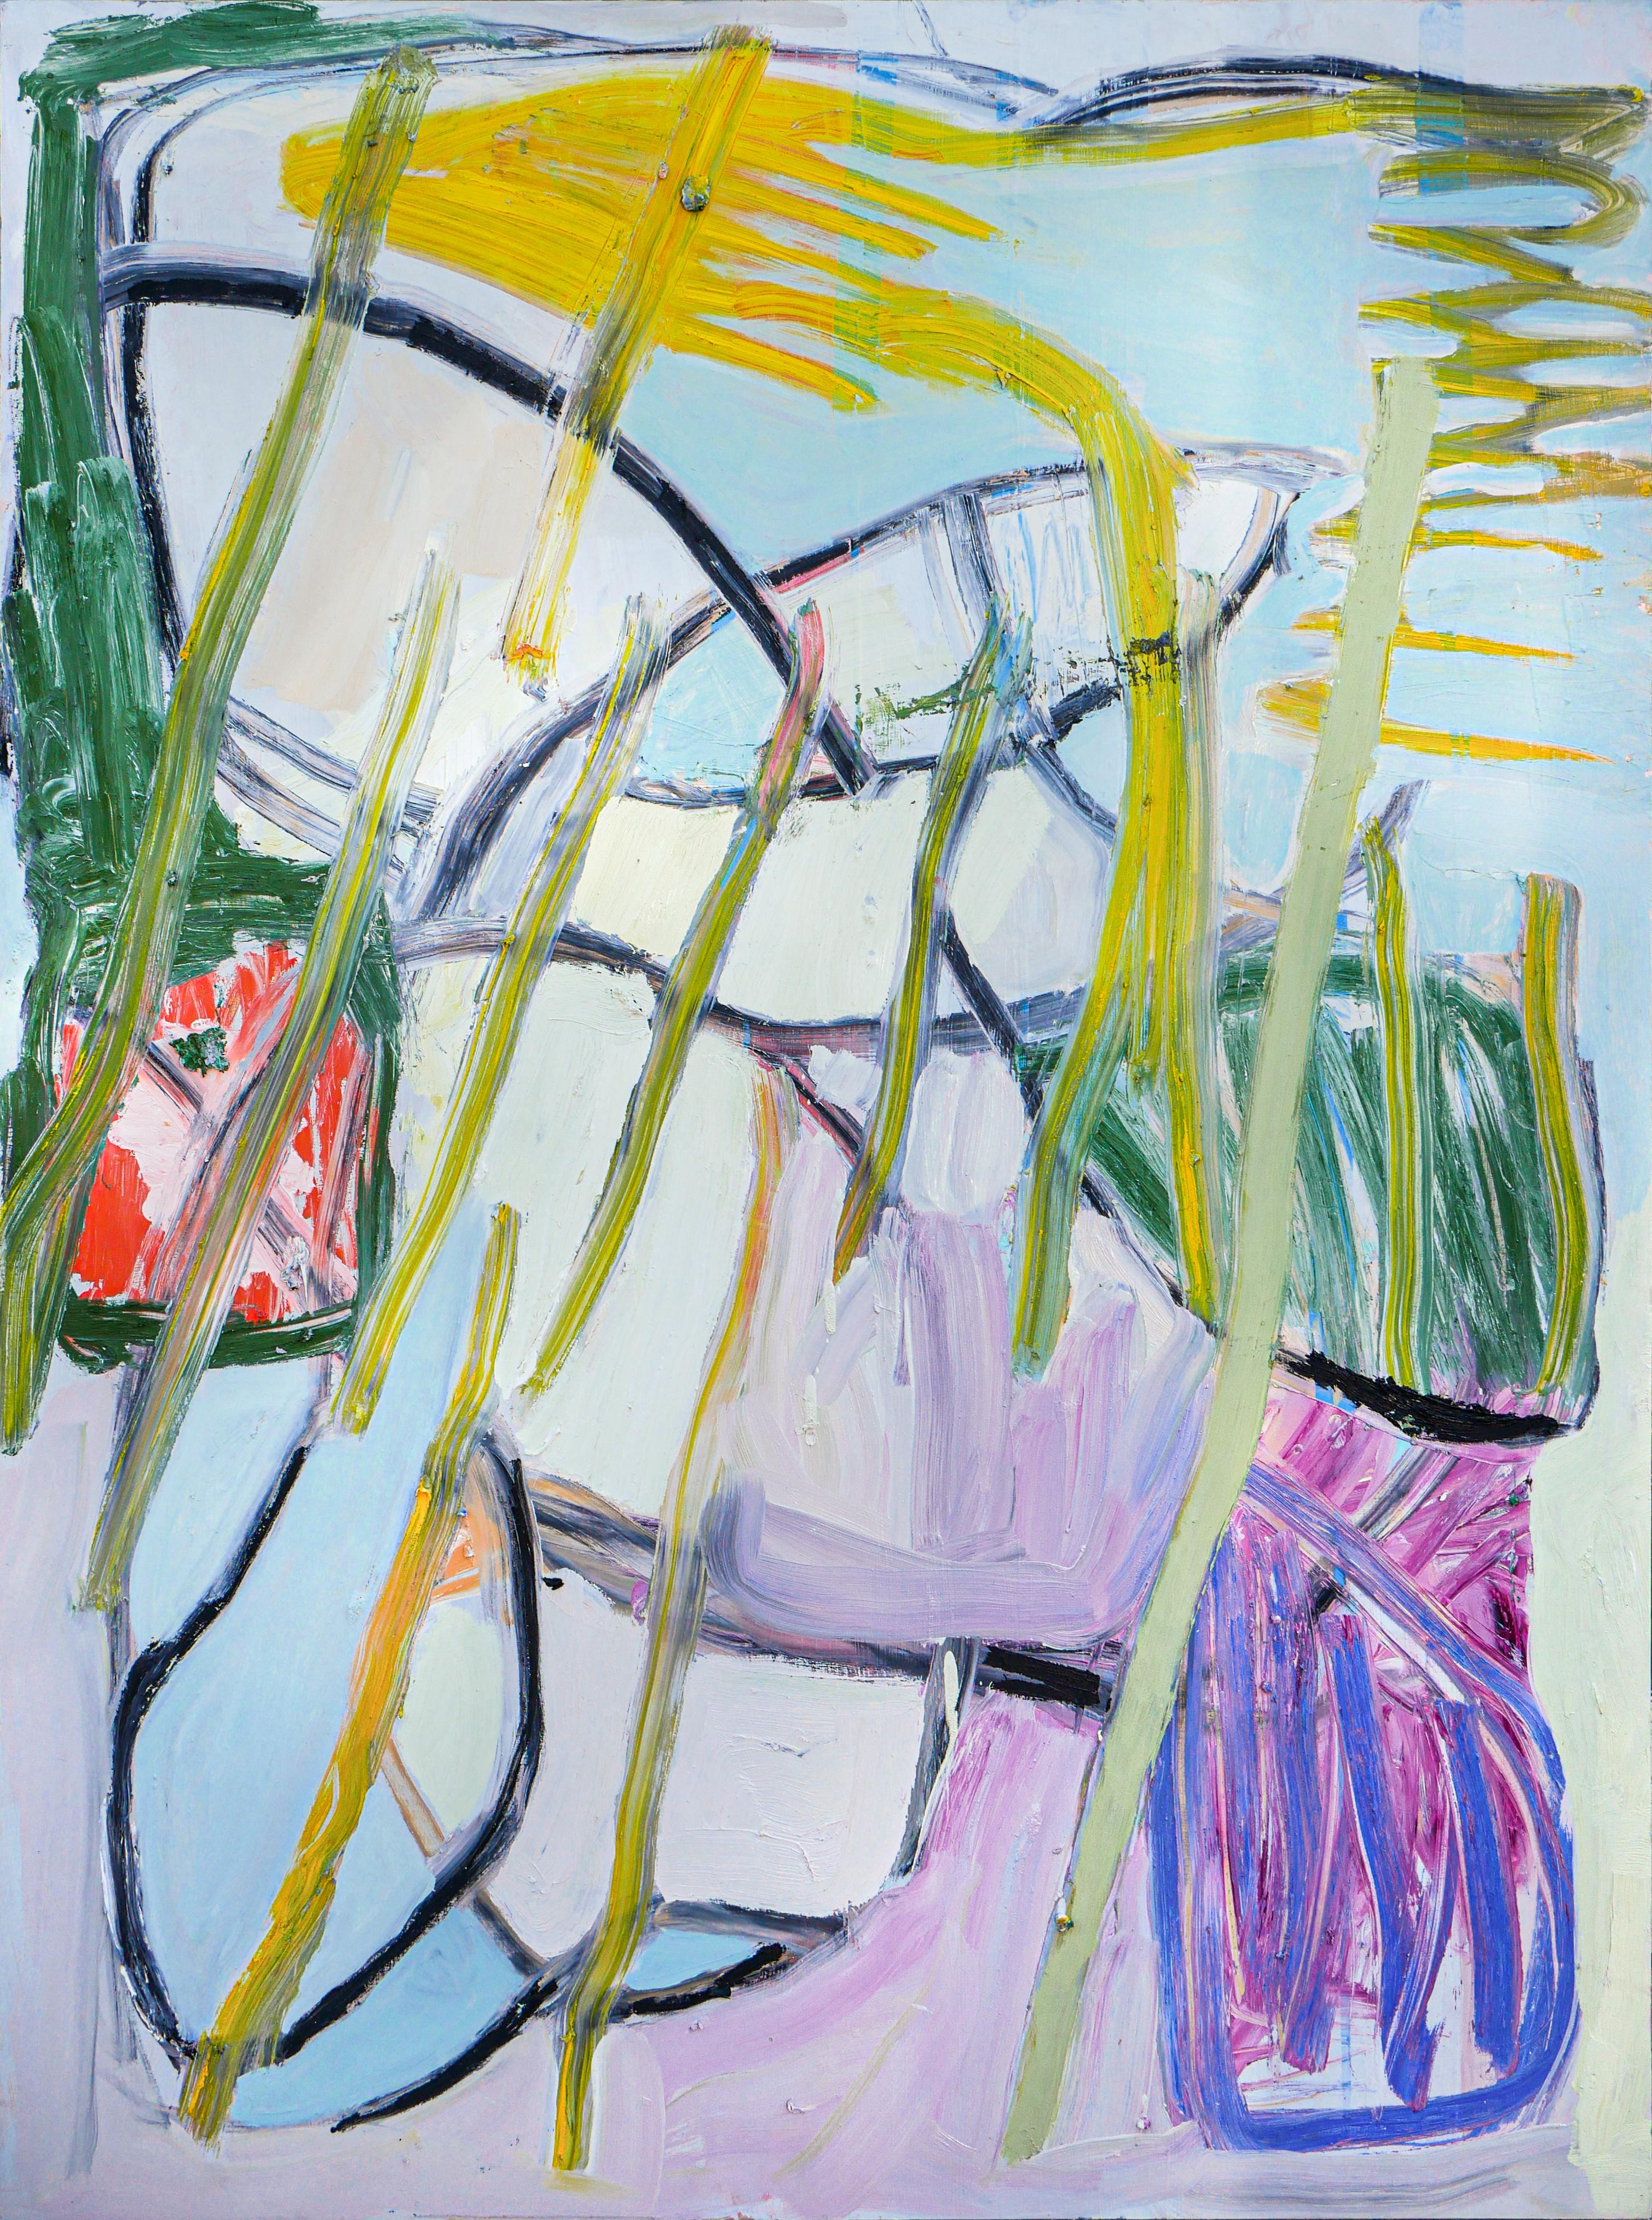 Peinture contemporaine abstraite violette, verte, bleue et jaune n° 14